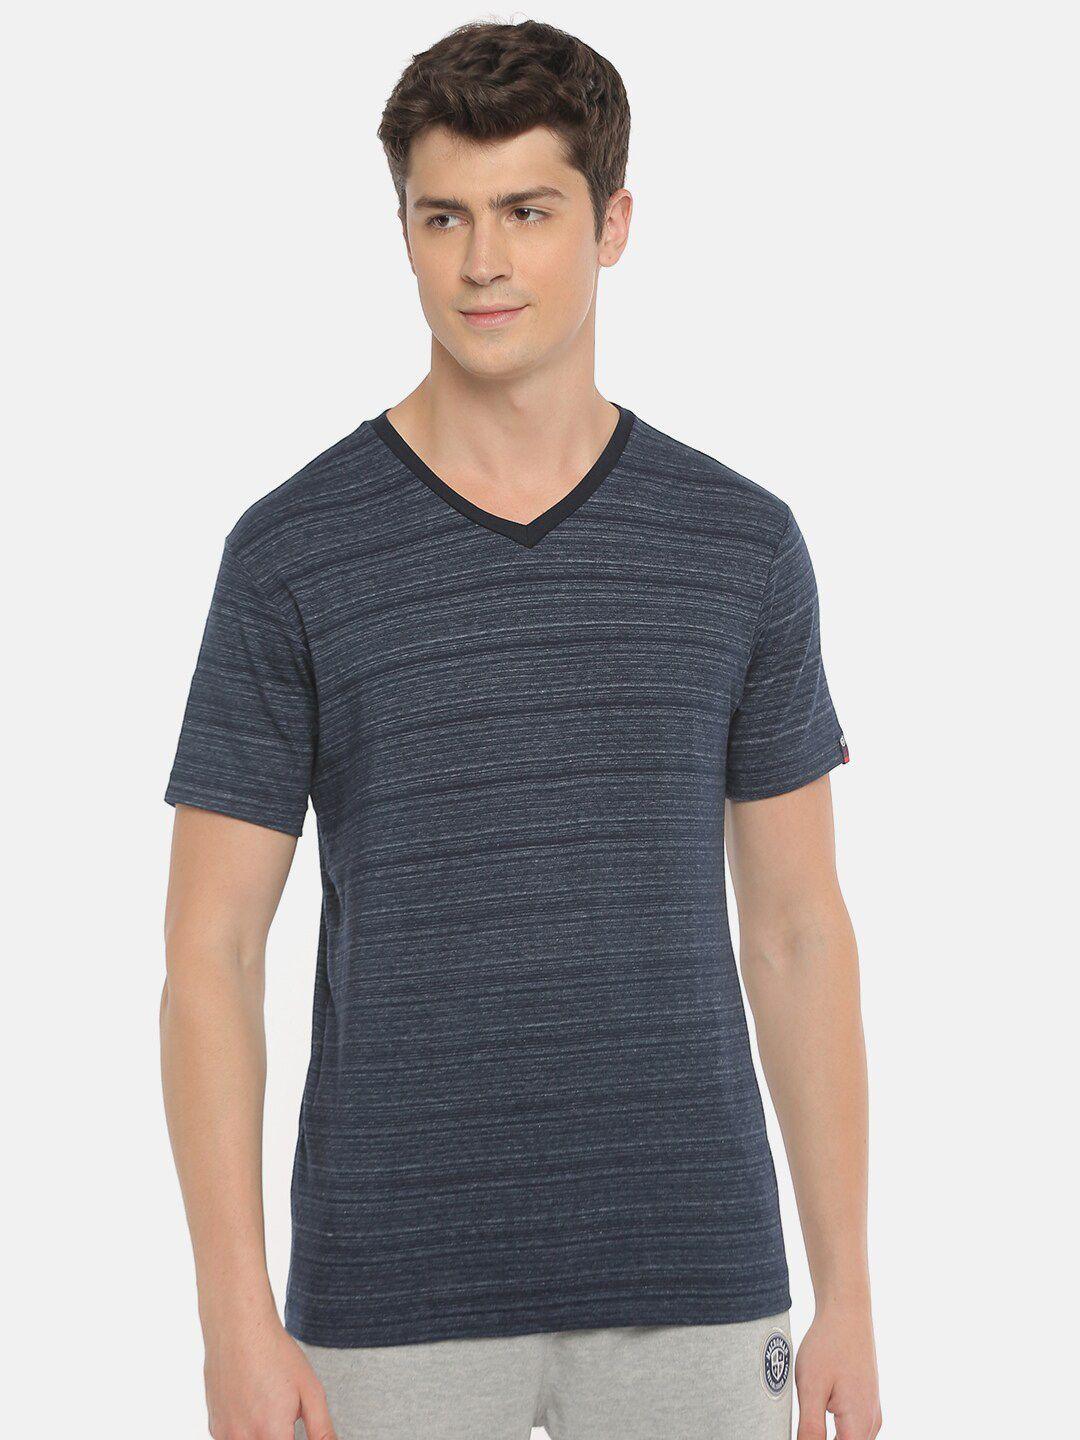 macroman m-series v-neck cotton sport t-shirt